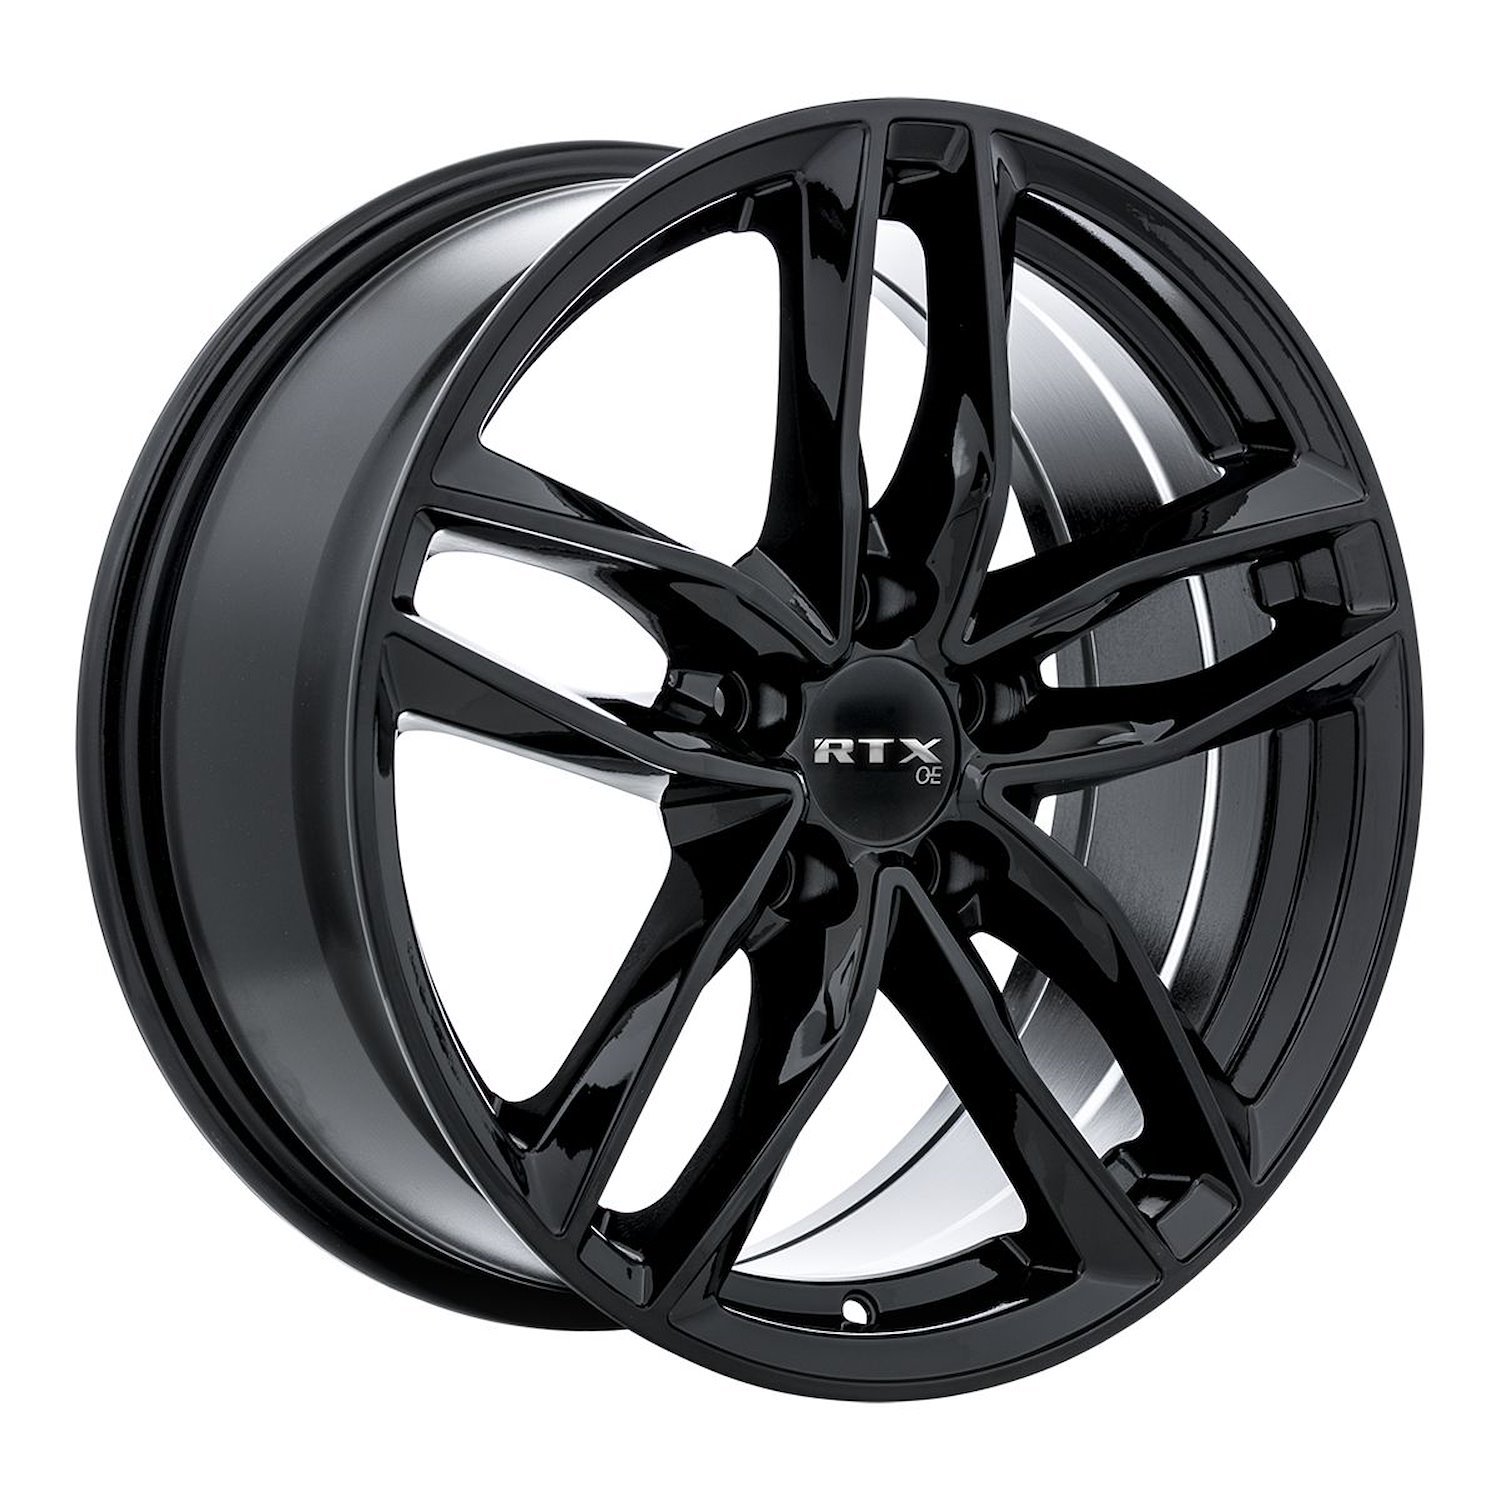 507402 OE-Series Nuremberg Wheel [Size: 18" x 8"] Gloss Black Finish